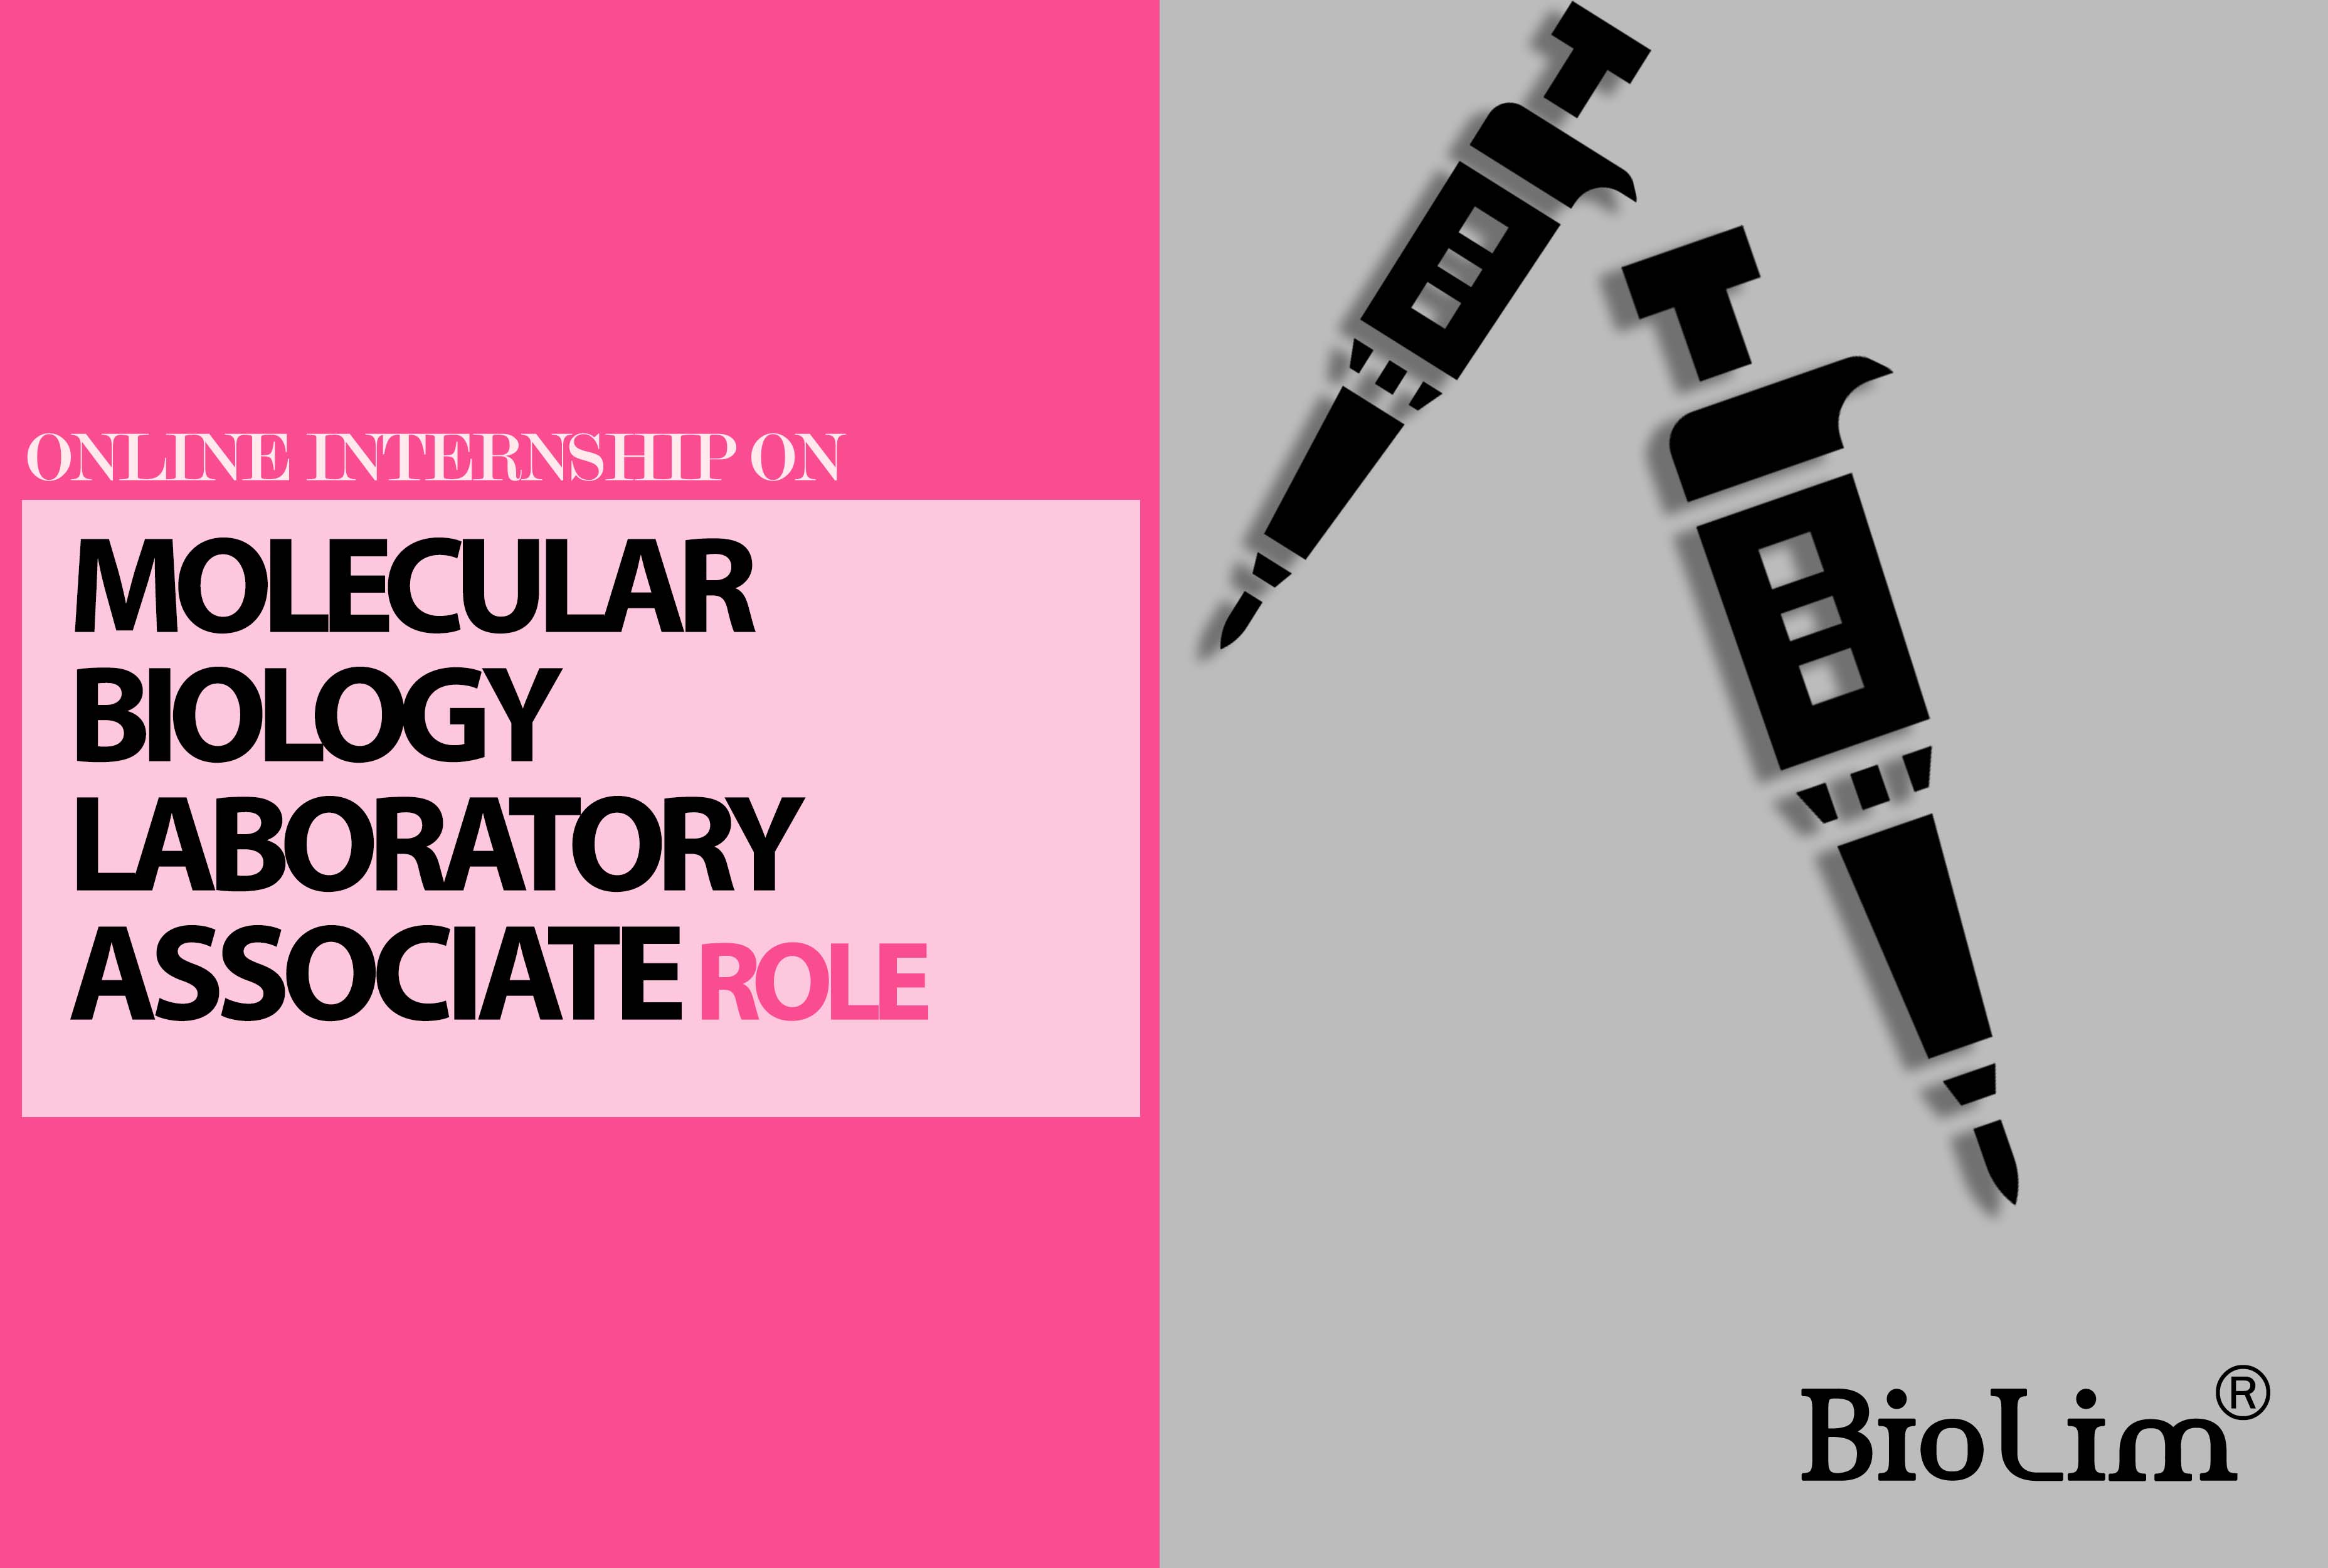 Internship on molecular biology laboratory associate job role